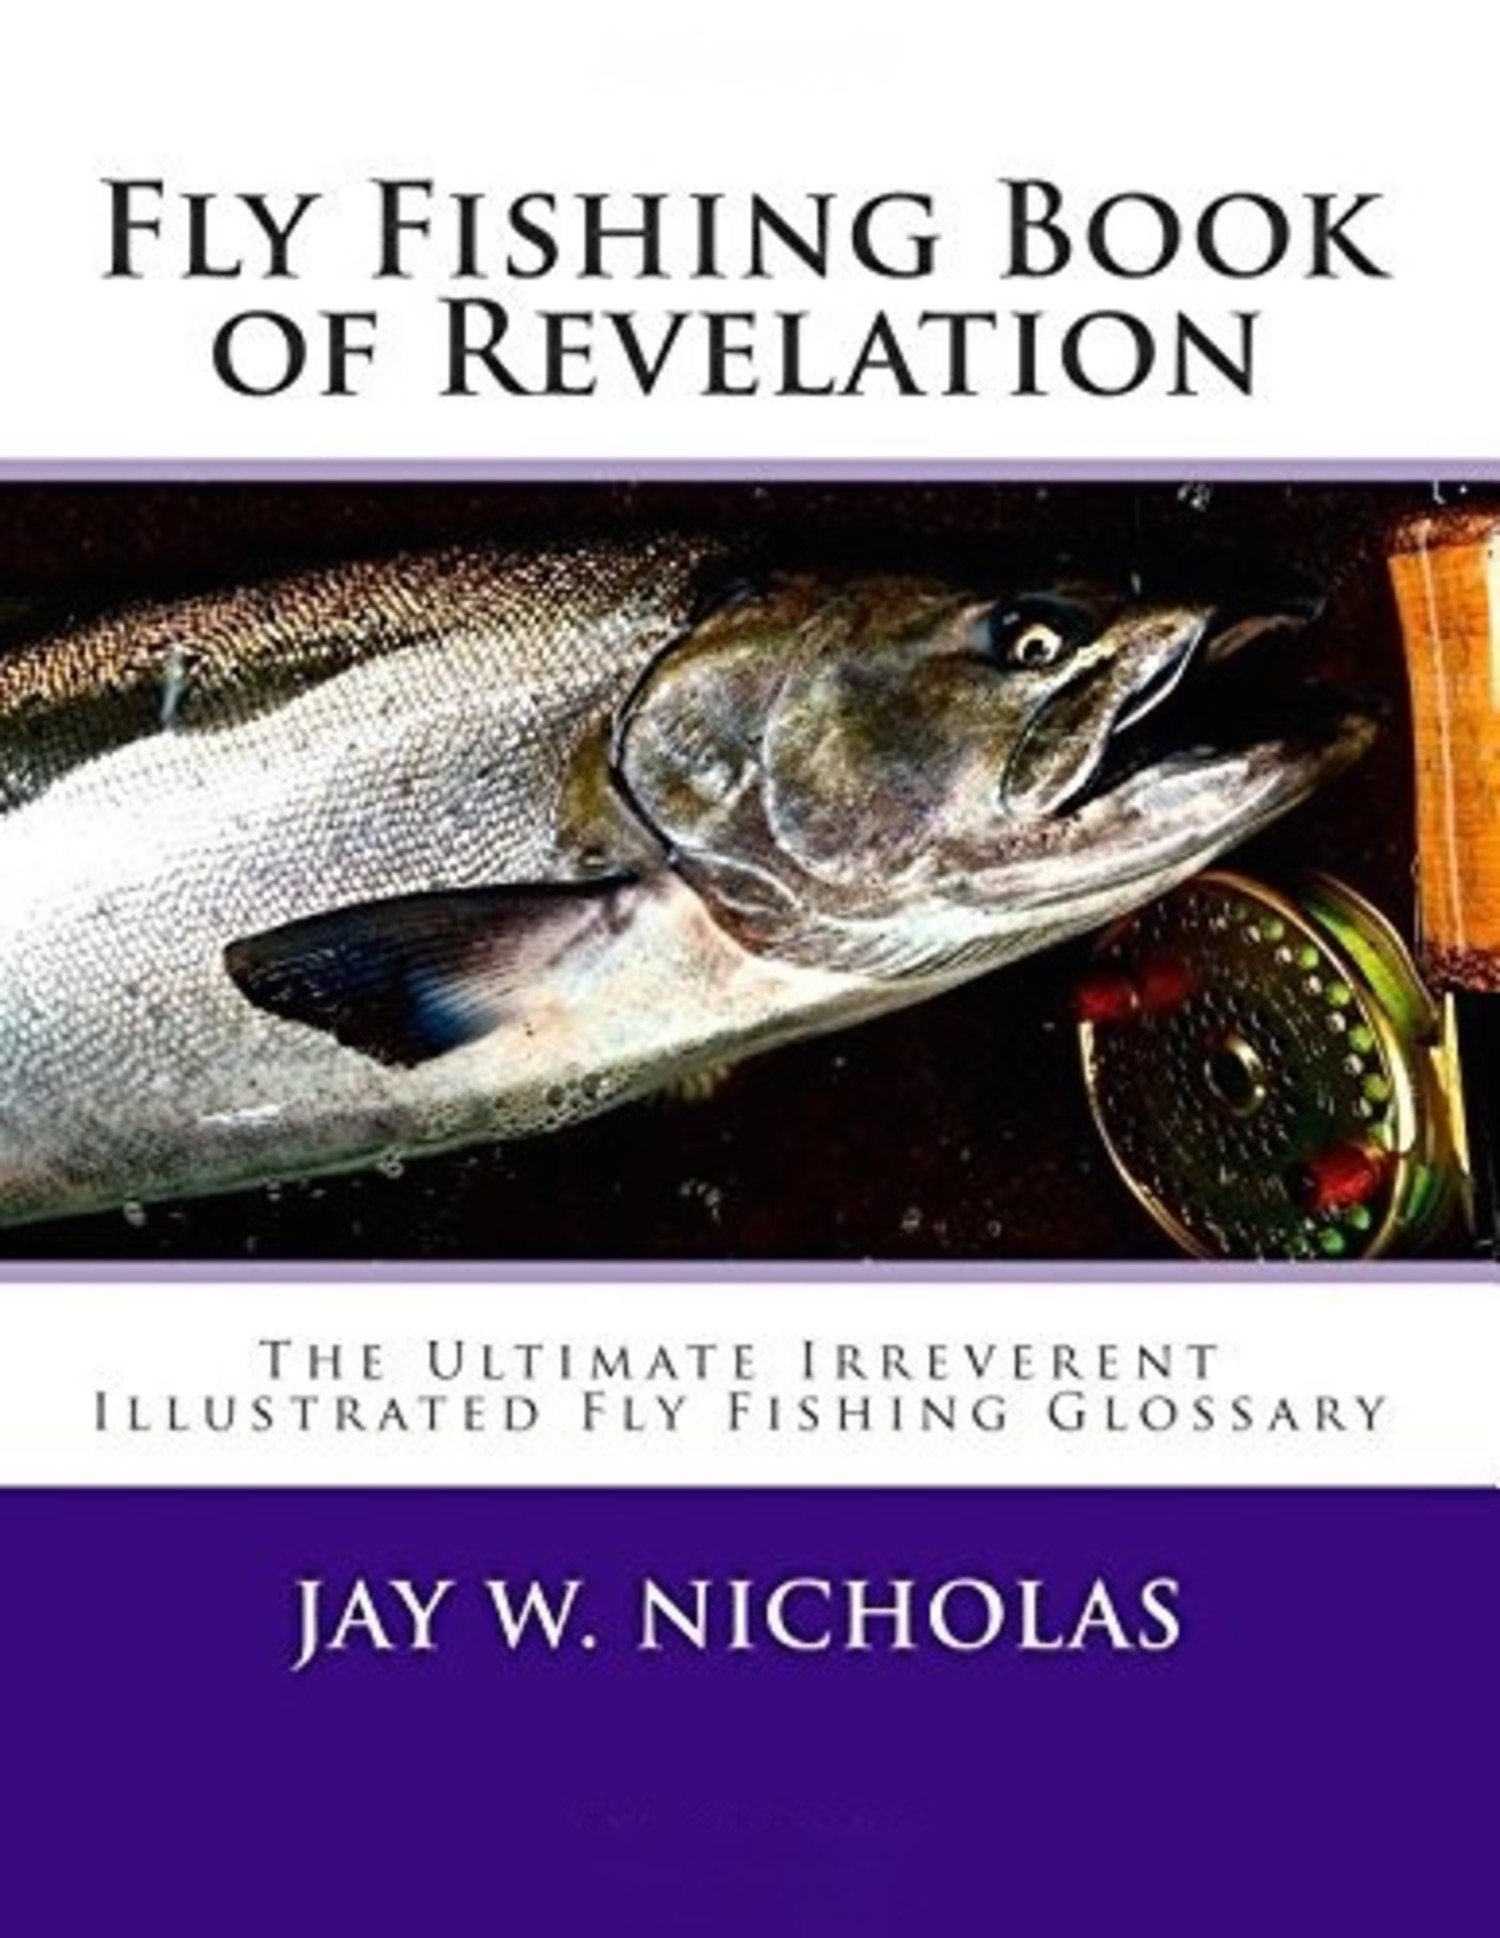 https://cdn.shoplightspeed.com/shops/618341/files/10329179/1500x4000x3/jay-nicholas-fly-fishing-book-of-revelation-by-jay.jpg